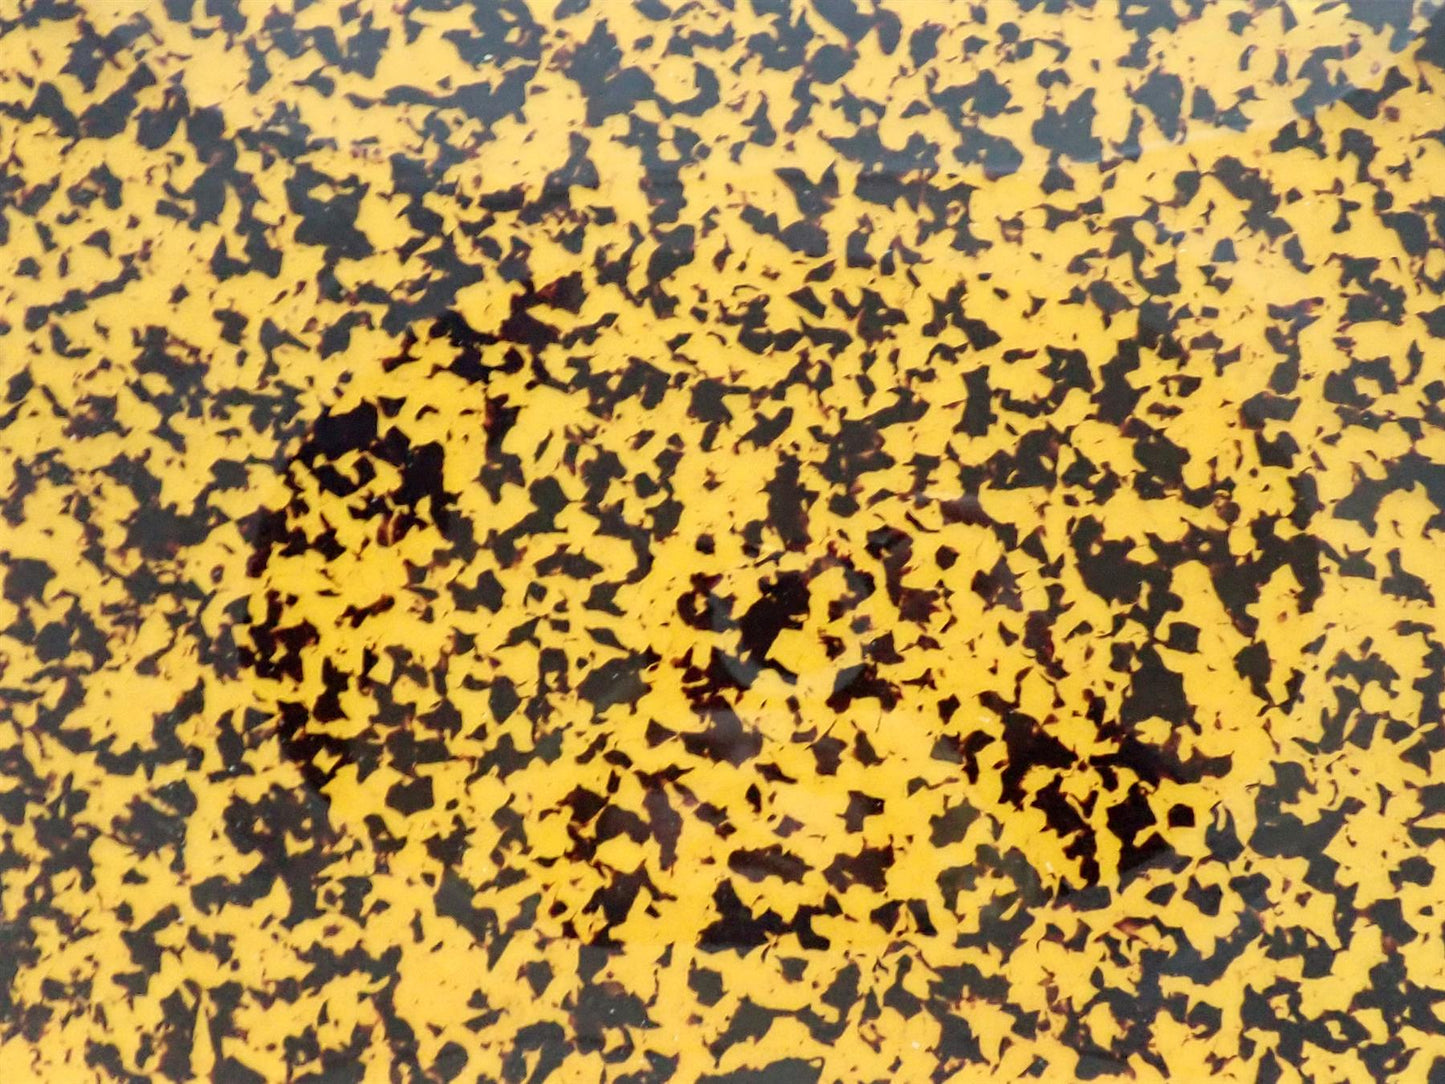 Incudo Brown Spotted Tortoiseshell PVC Sheet - 300x200x2.3mm (11.8x7.87x0.09")